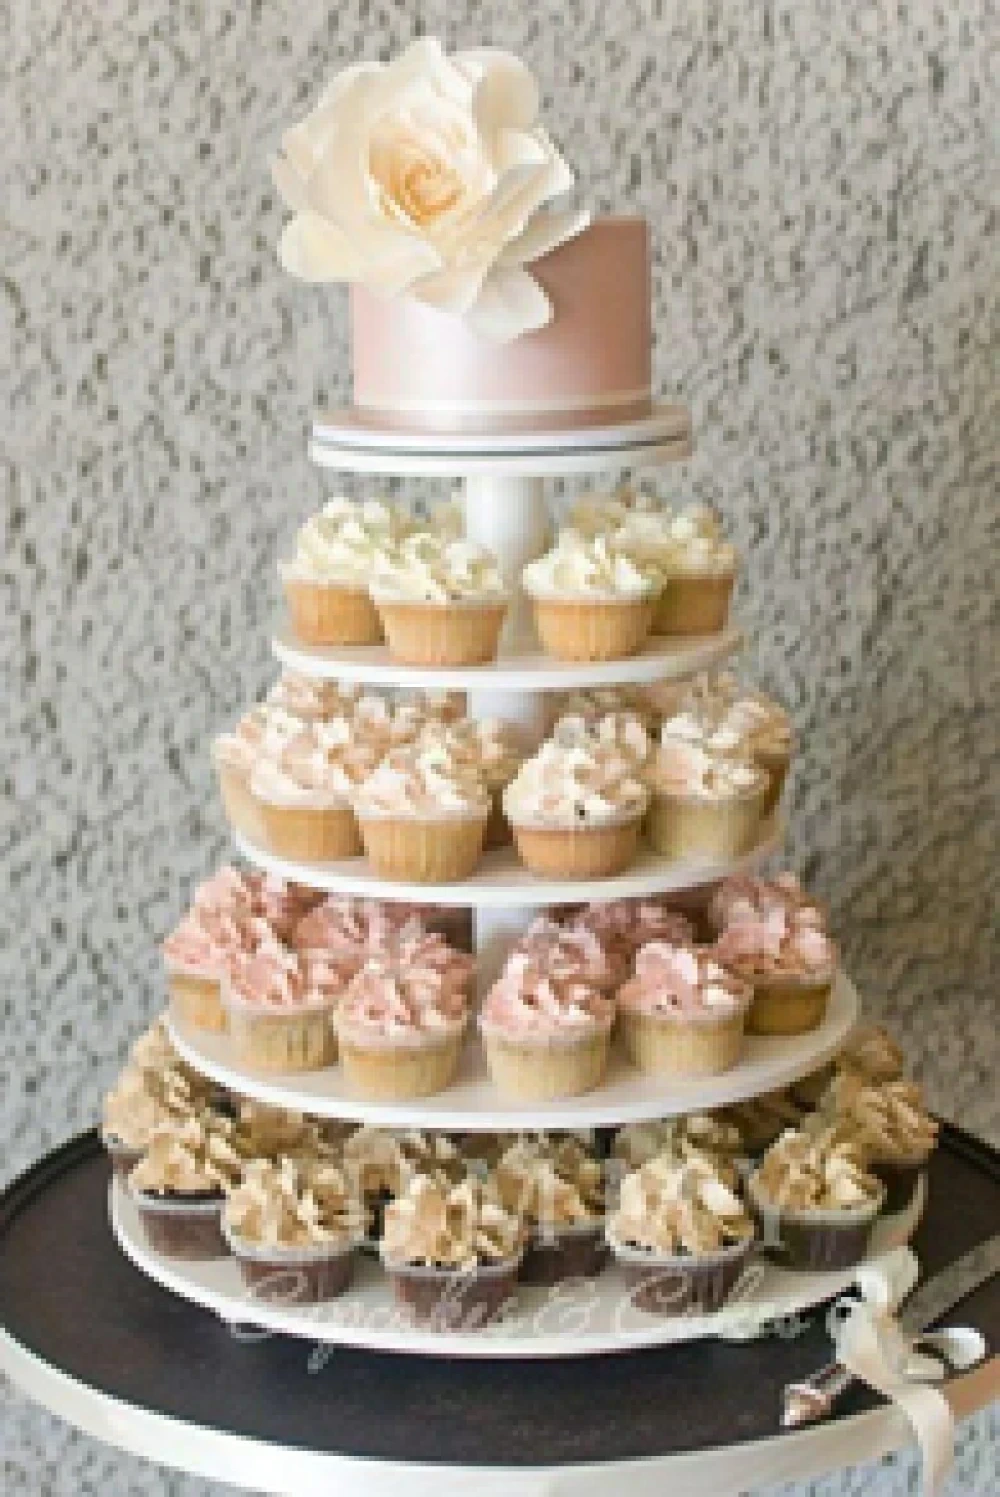 Тортик капкейки. Свадебные капкейки. Свадебные пирожные. Торт с капкейками. Торт с капкейками на свадьбу.